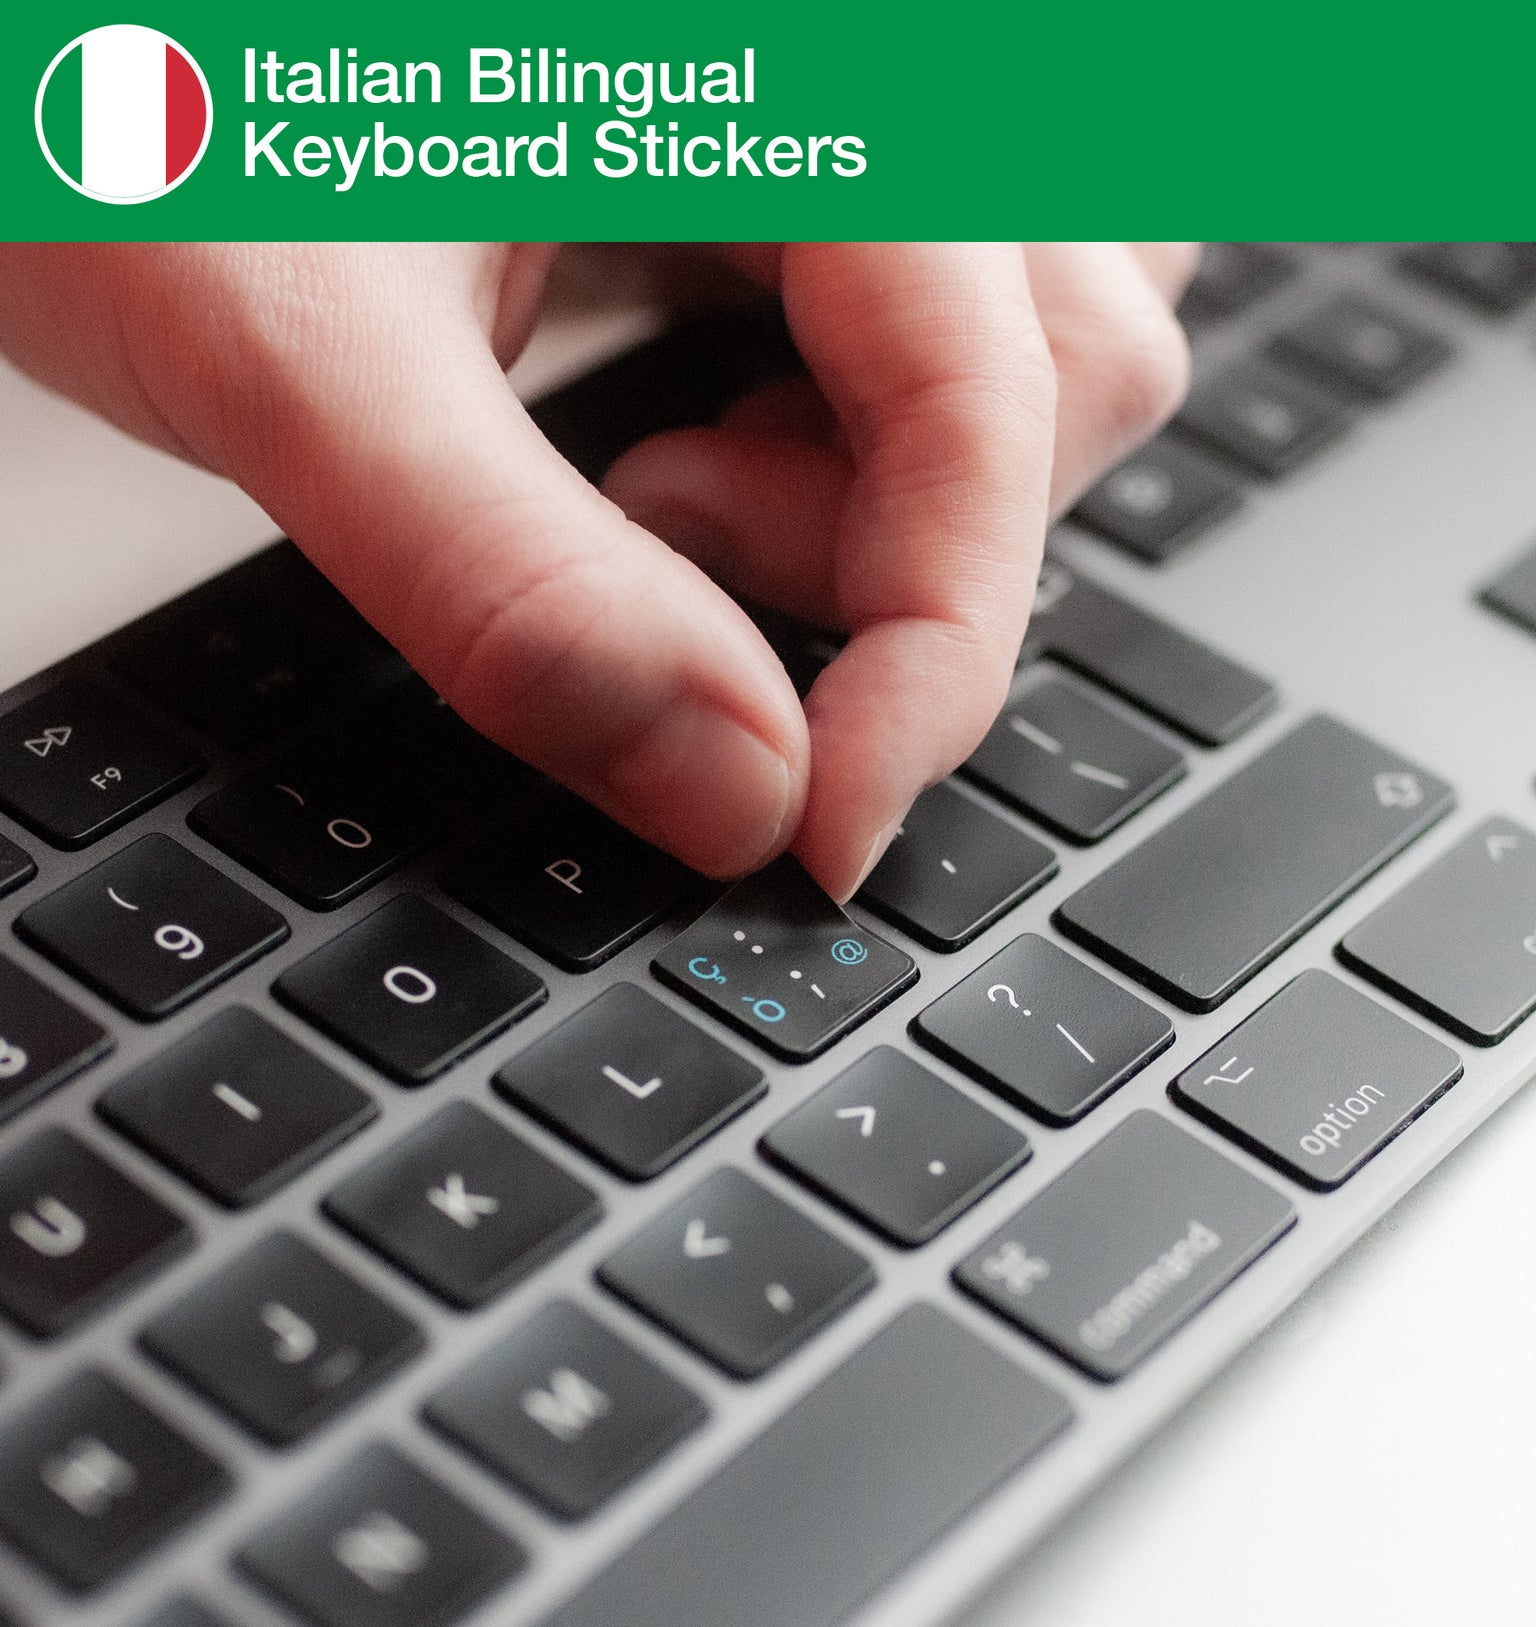 Italian Bilingual Keyboard Stickers with Italian keyboard layout